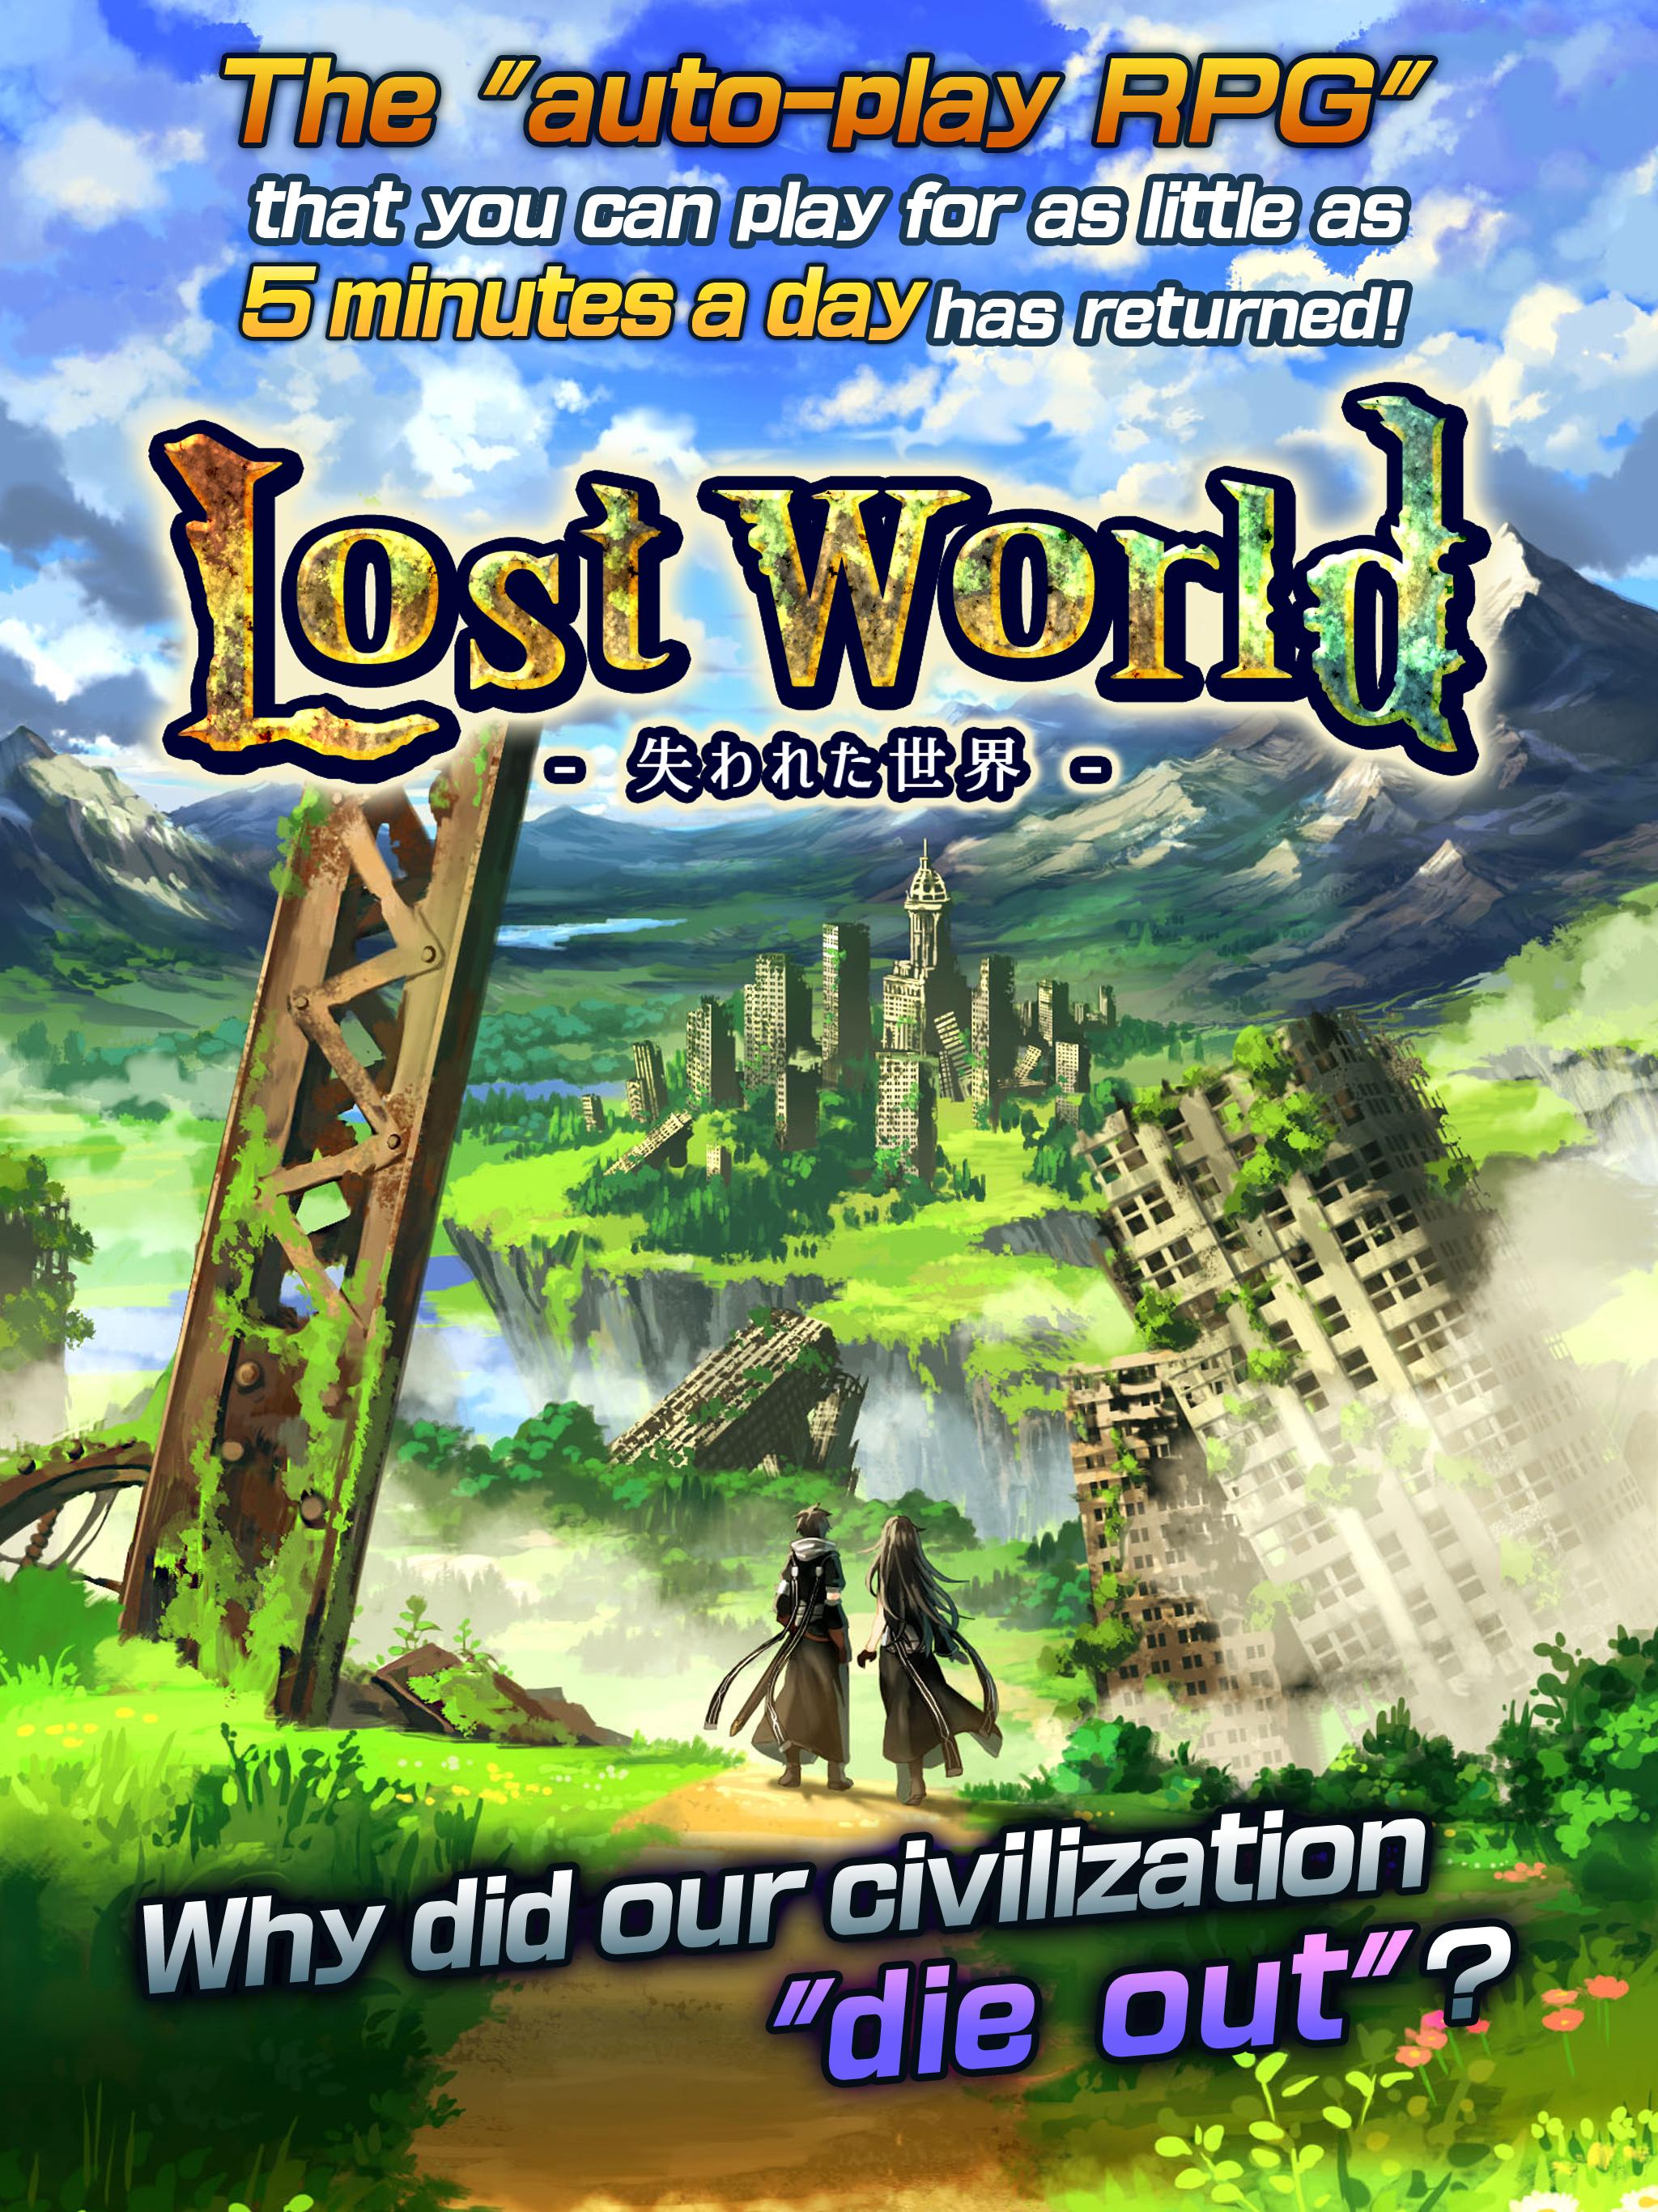 Lost World - 失われた世界 - 1.2.2 Screenshot 6